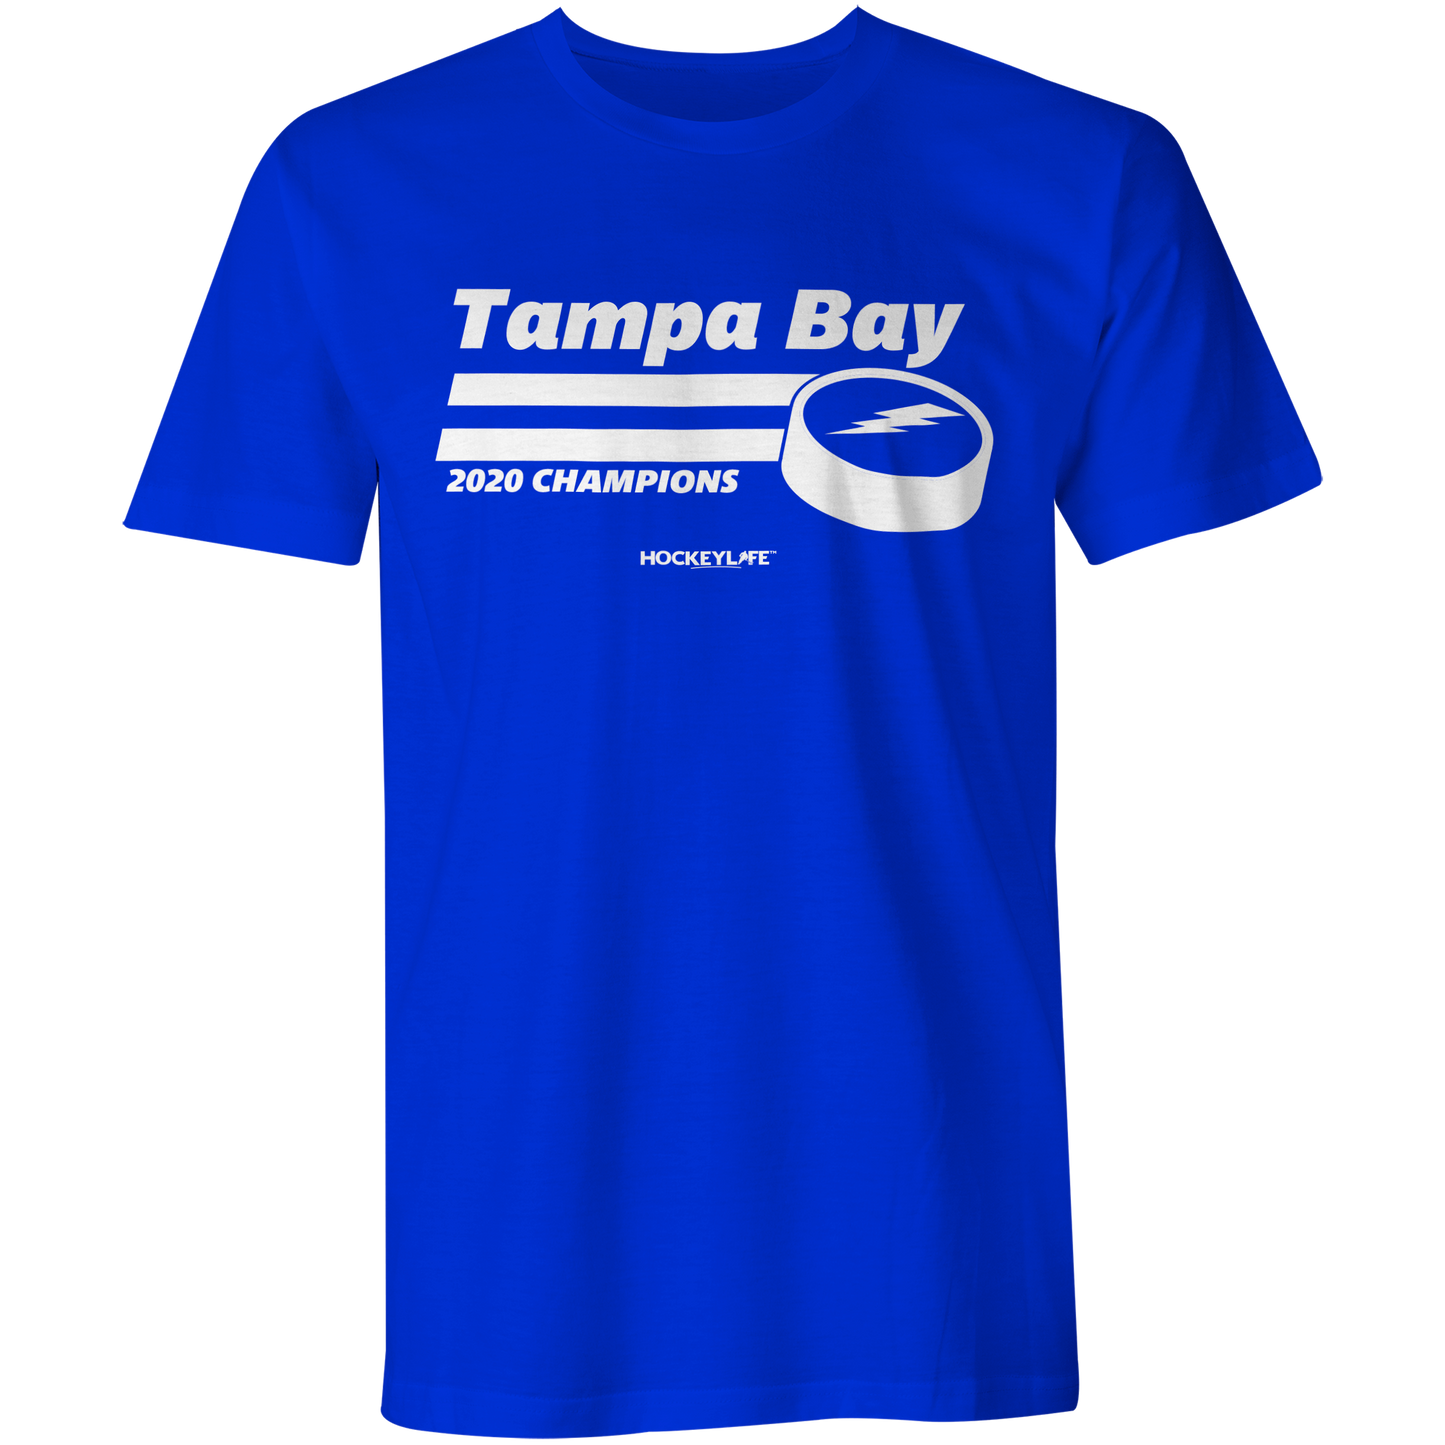 Tampa Bay 2020 Championship Tee Shirt